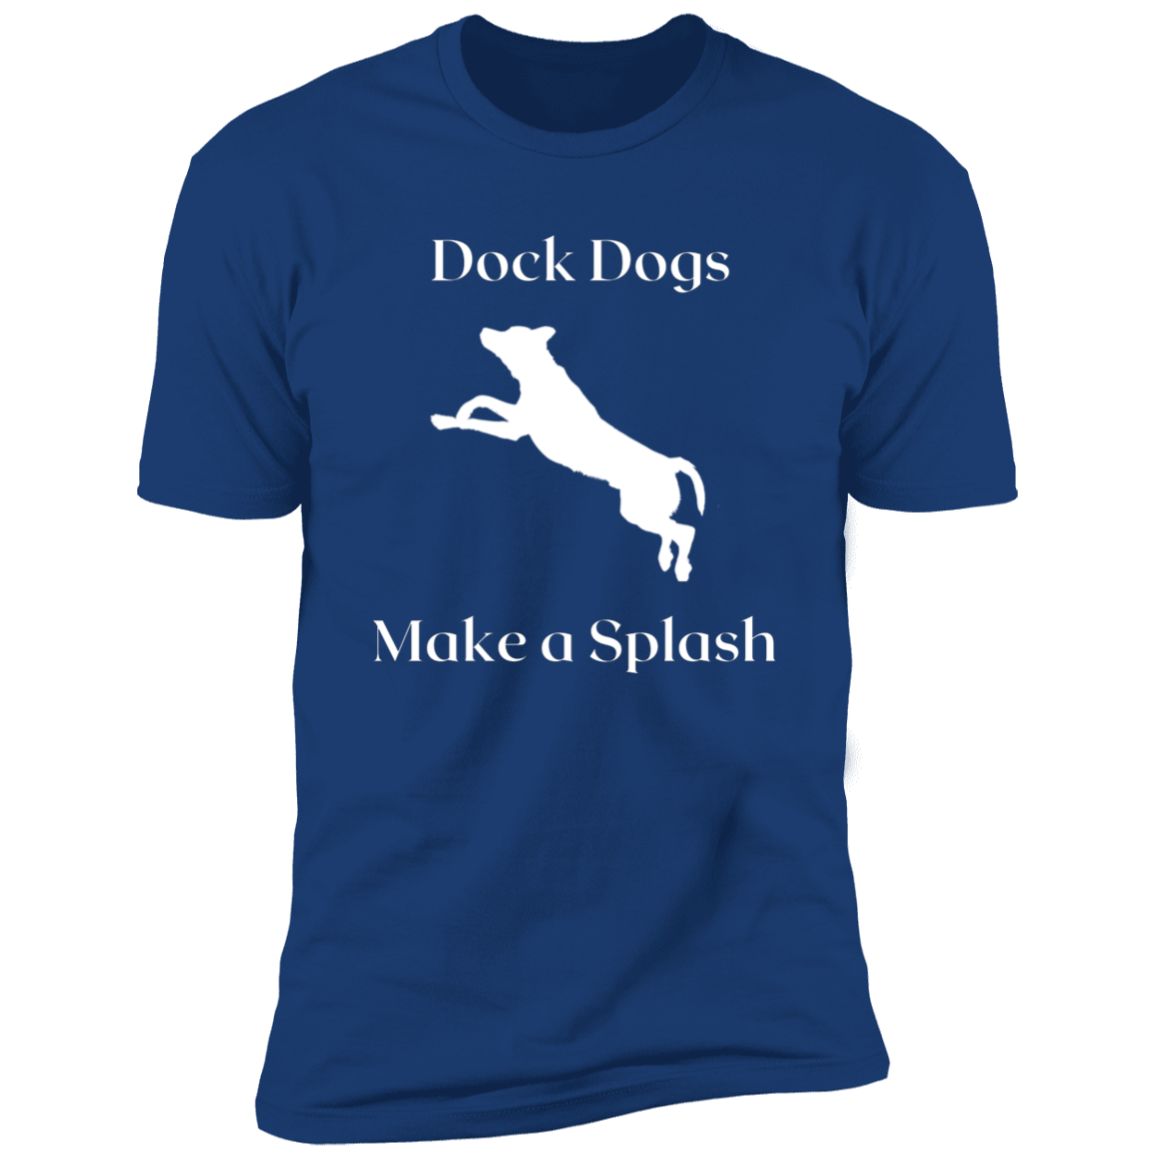 Dock Dogs Make a Splash Dock Diving t-shirt, Dock diving shirt, in royal blue